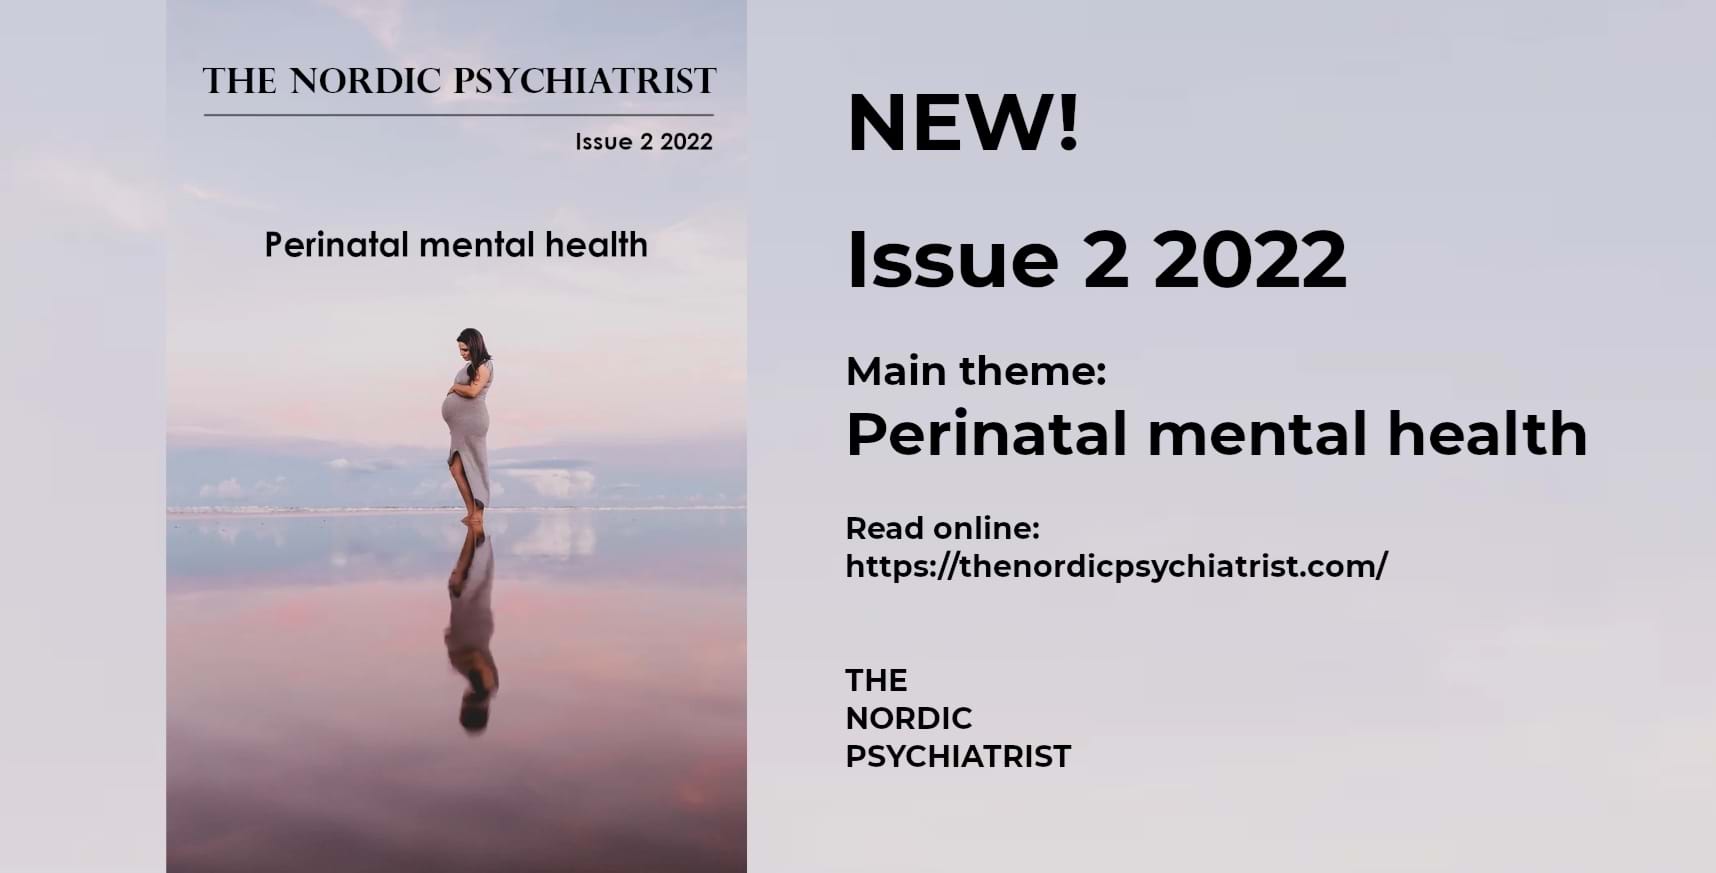 The Nordic Psychiatrist, Issue 2, 2022.